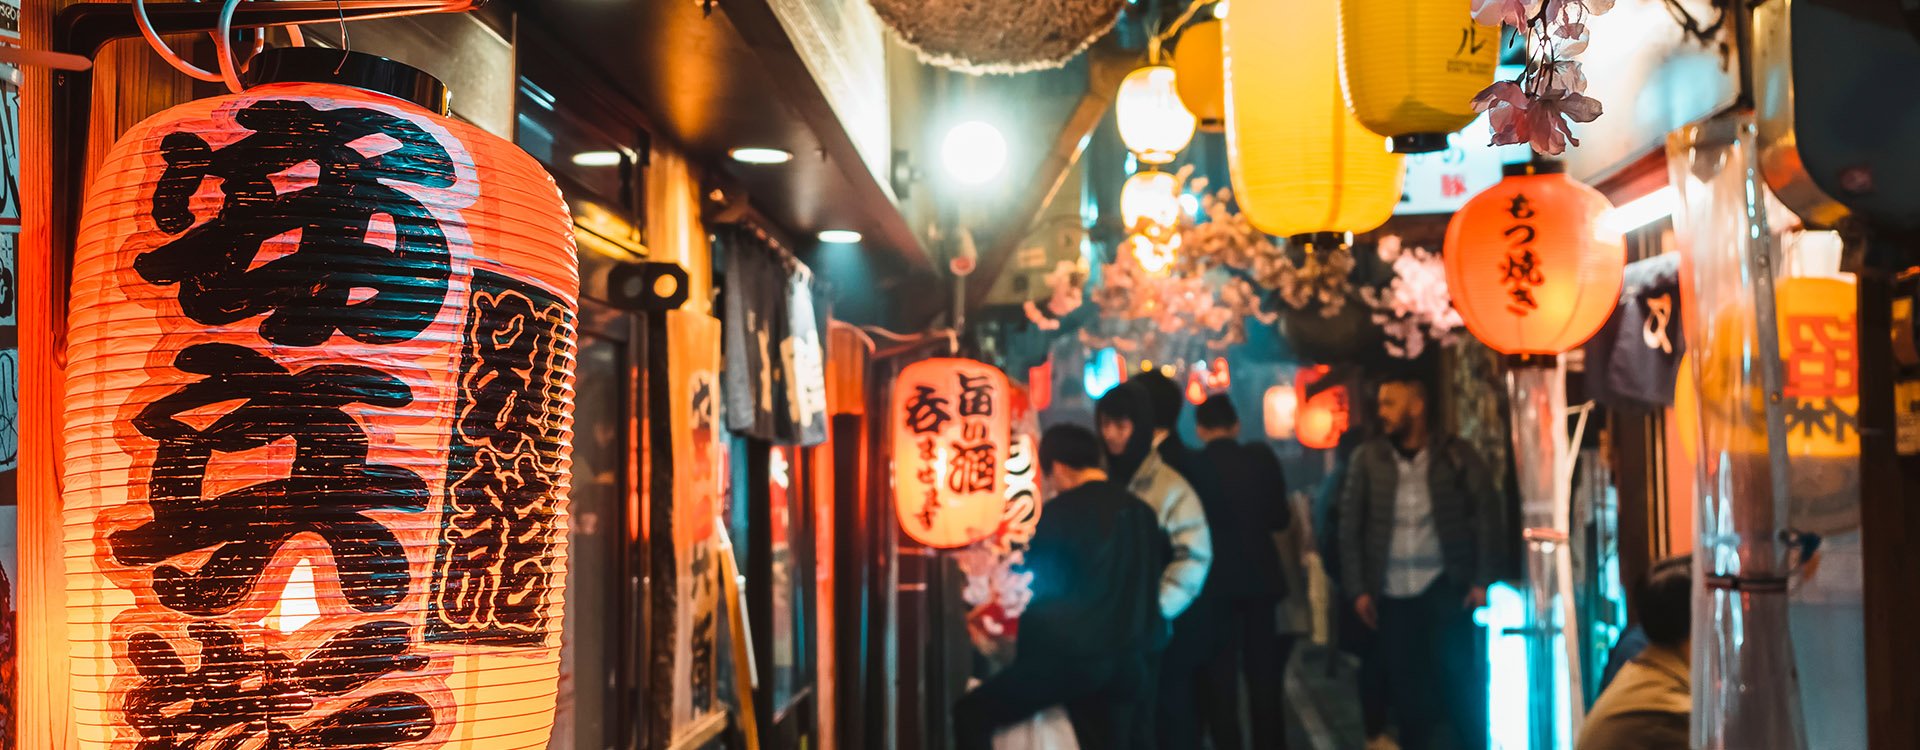 Omoide Yokocho, Shinjuku Bar street shop sign Japan Izakaya Tokyo Night life